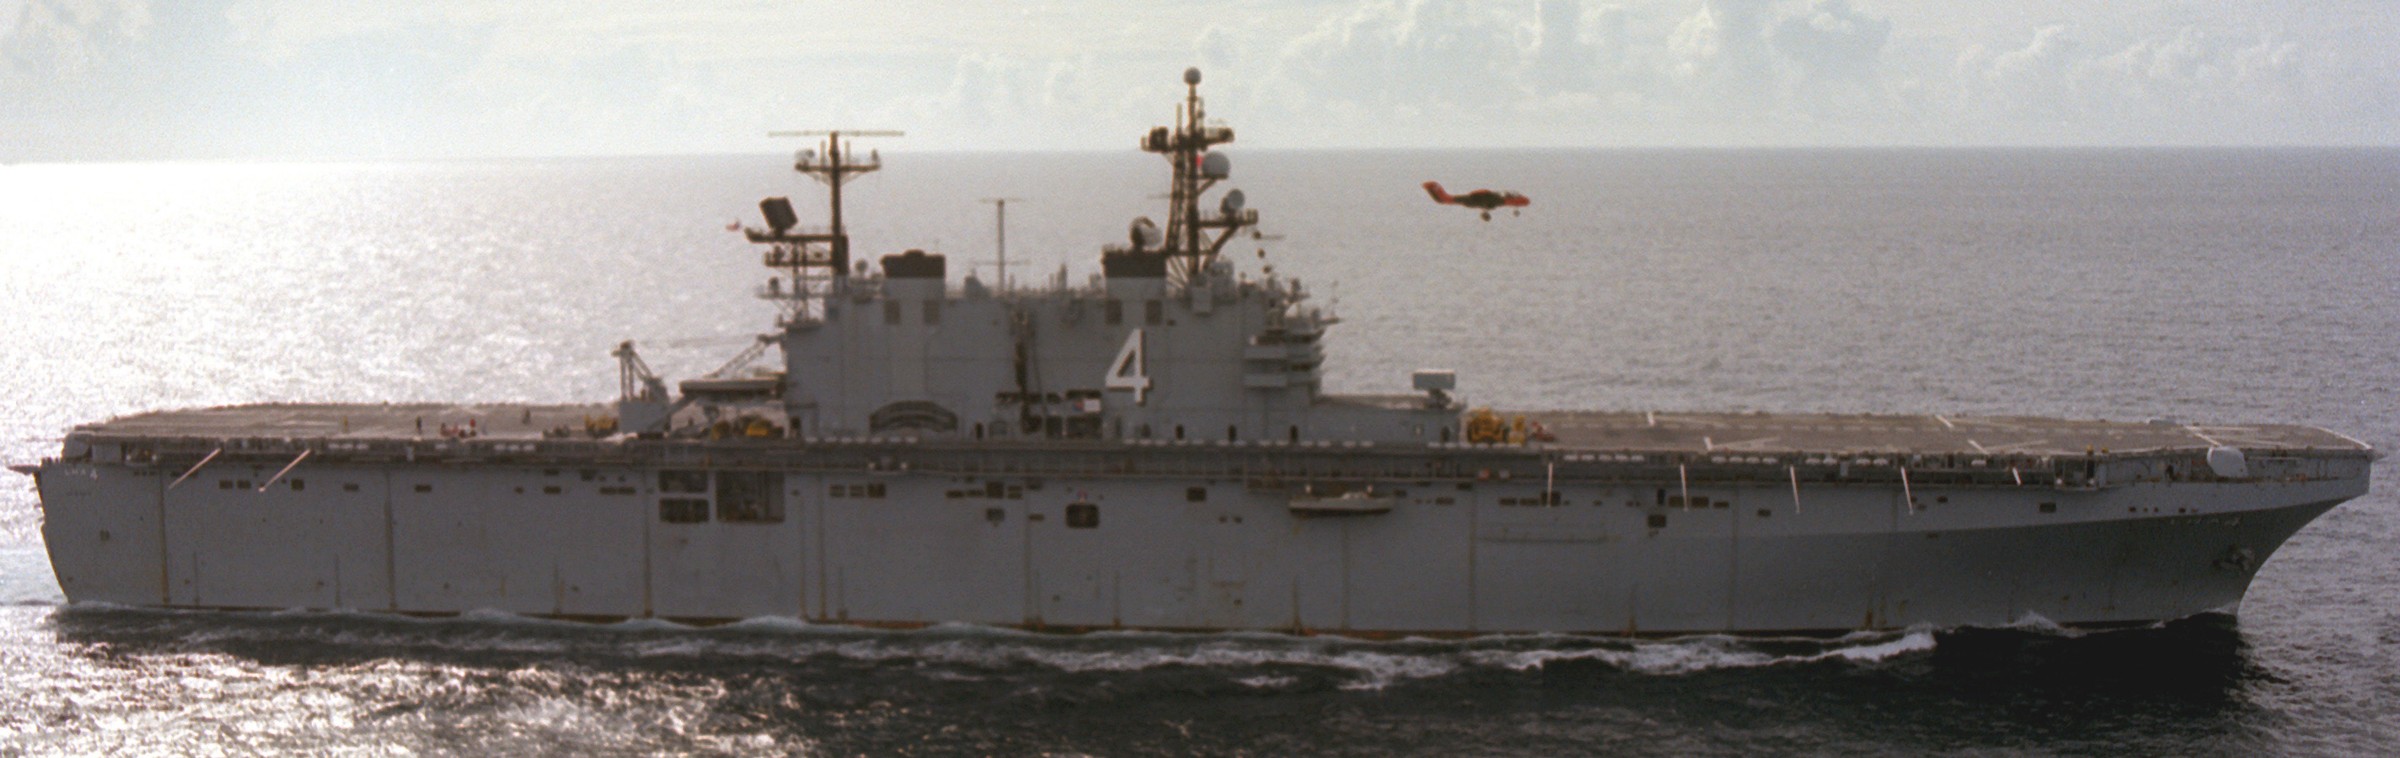 lha-4 uss nassau tarawa class amphibious assault ship us navy 85